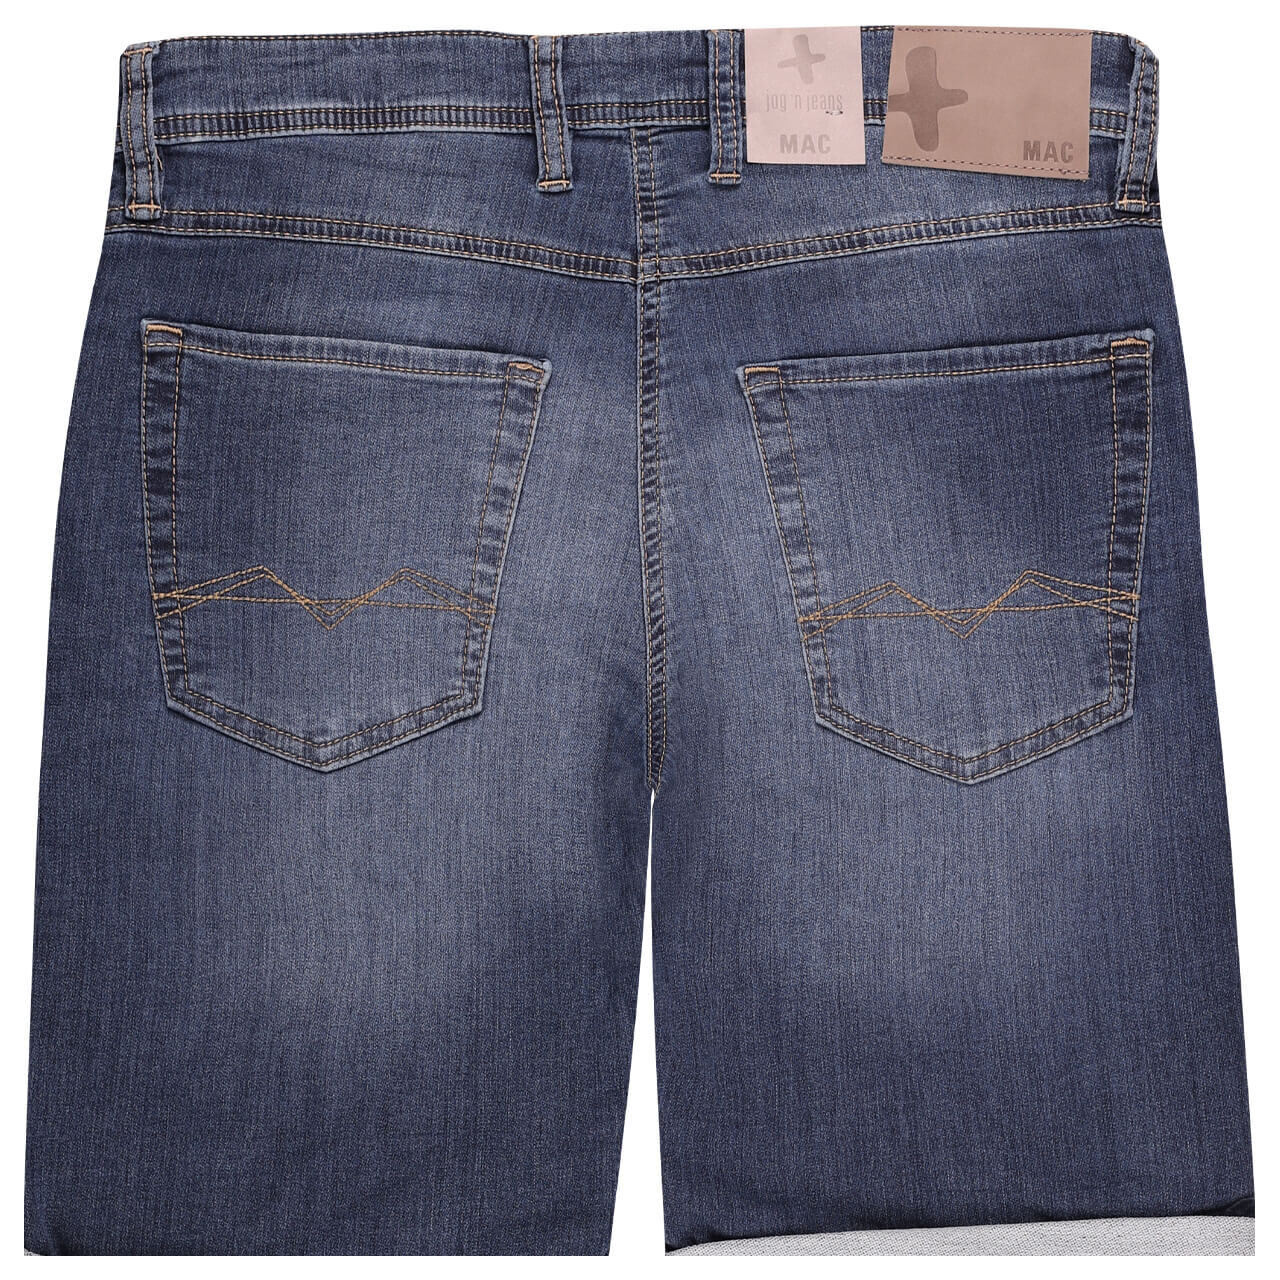 MAC Jogn Jeans Bermuda vintage wash